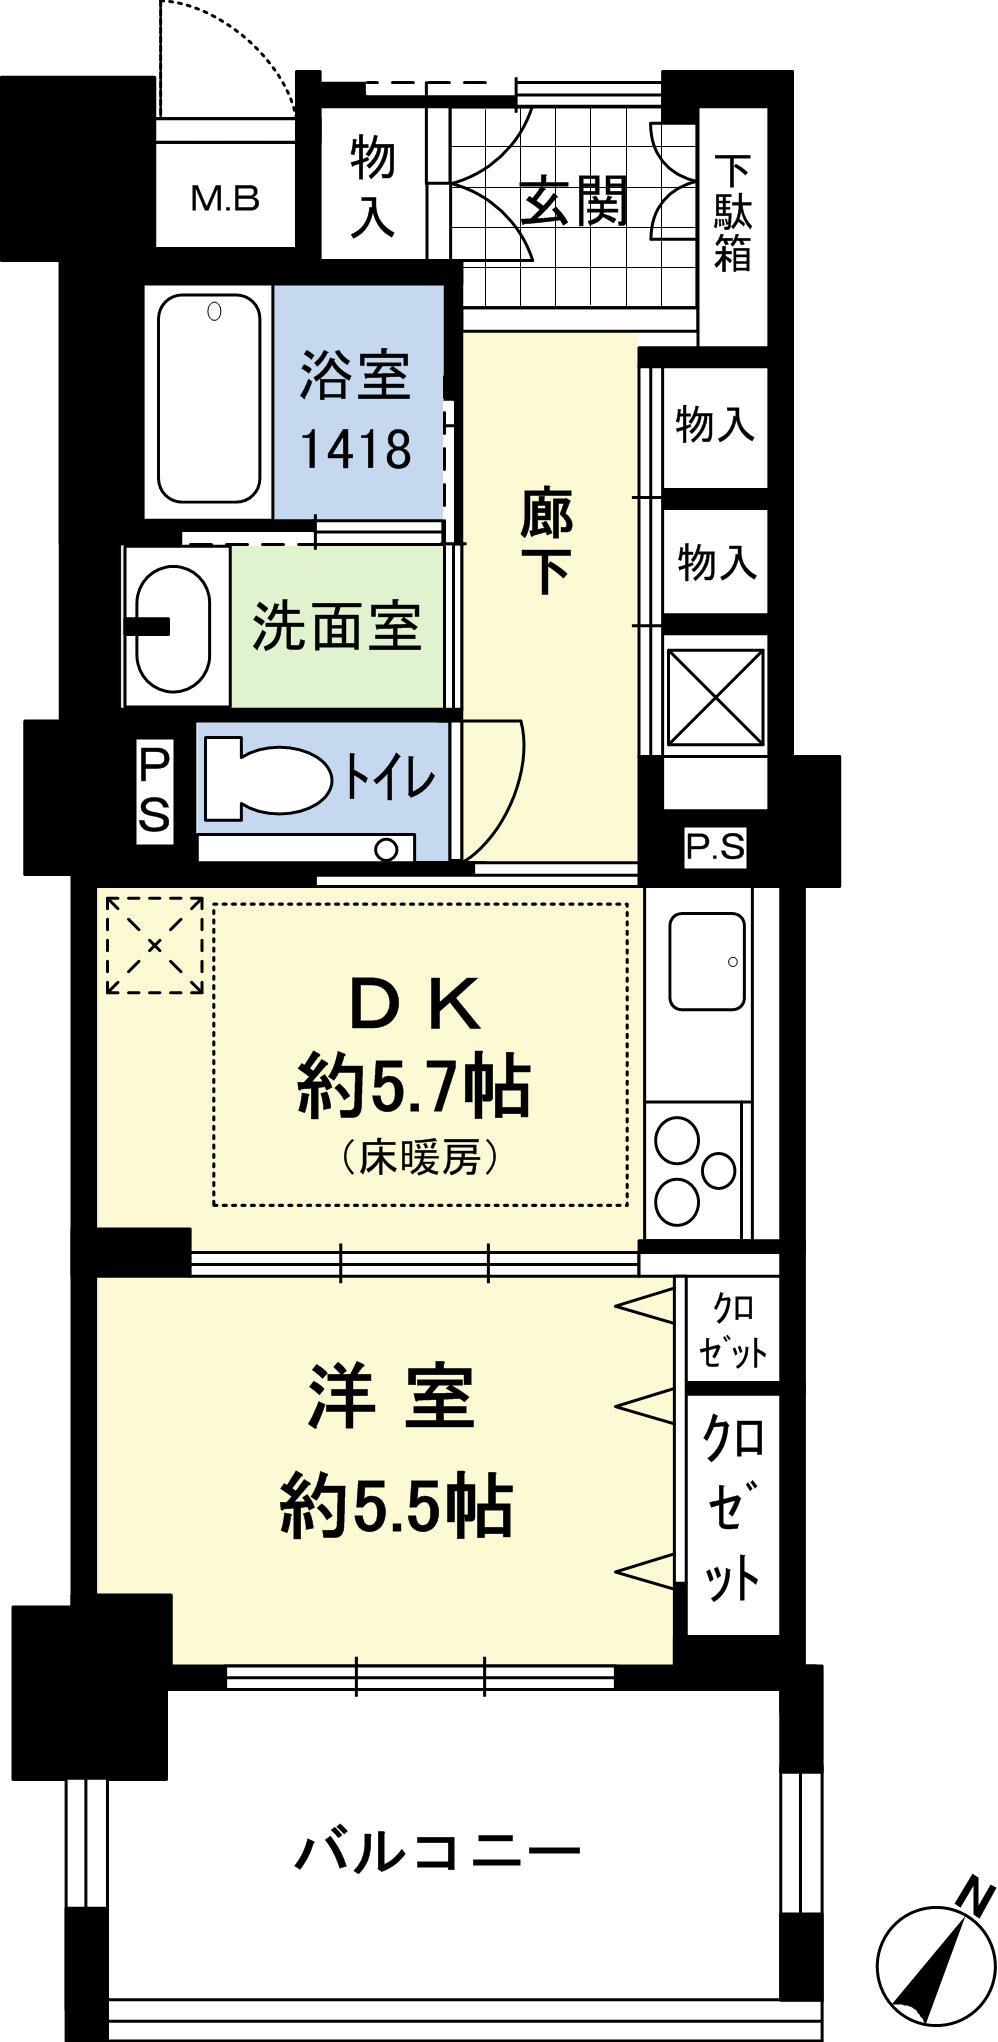 Floor plan. 1DK, Price 15.8 million yen, Occupied area 38.34 sq m , Balcony area 8.4 sq m